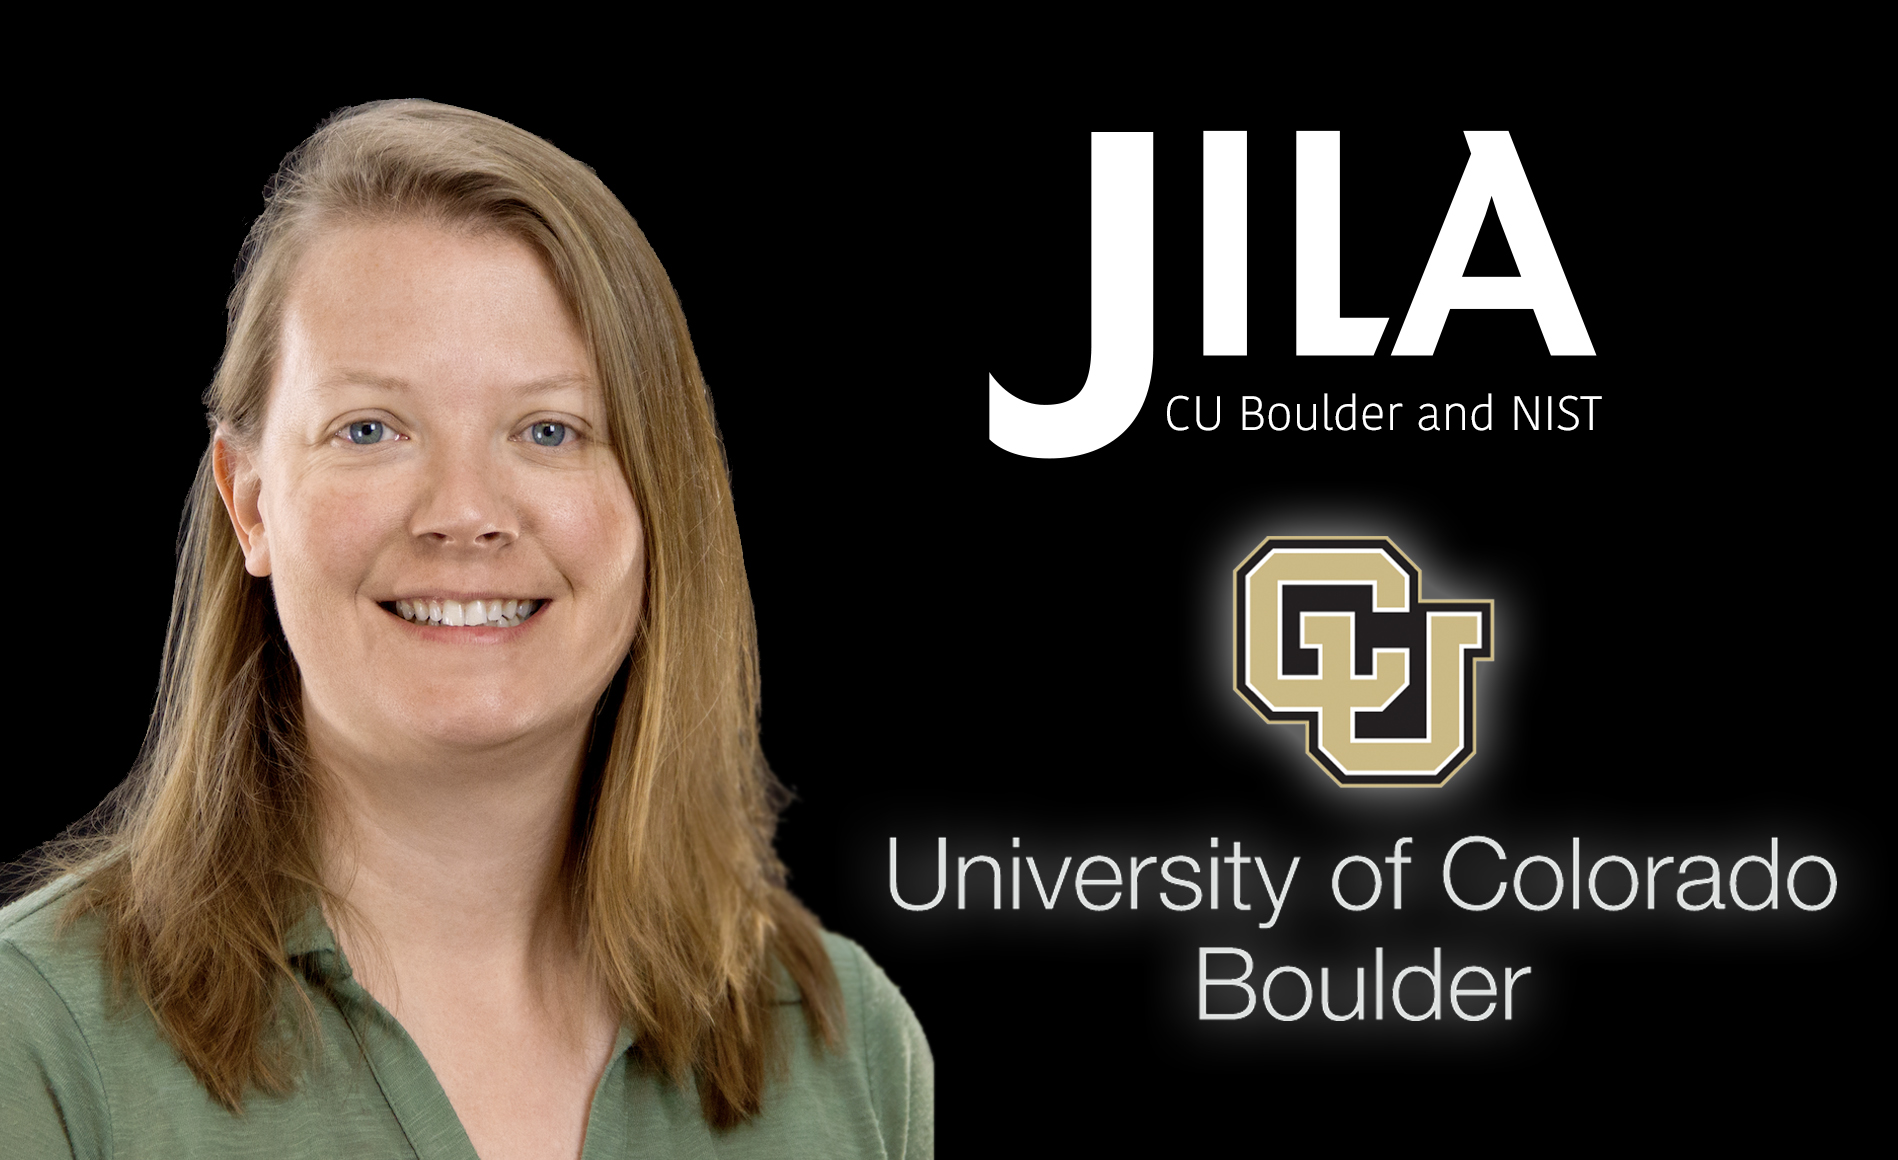 Image of Prof. Heather Lewandowski and the JILA and Colorado University logos